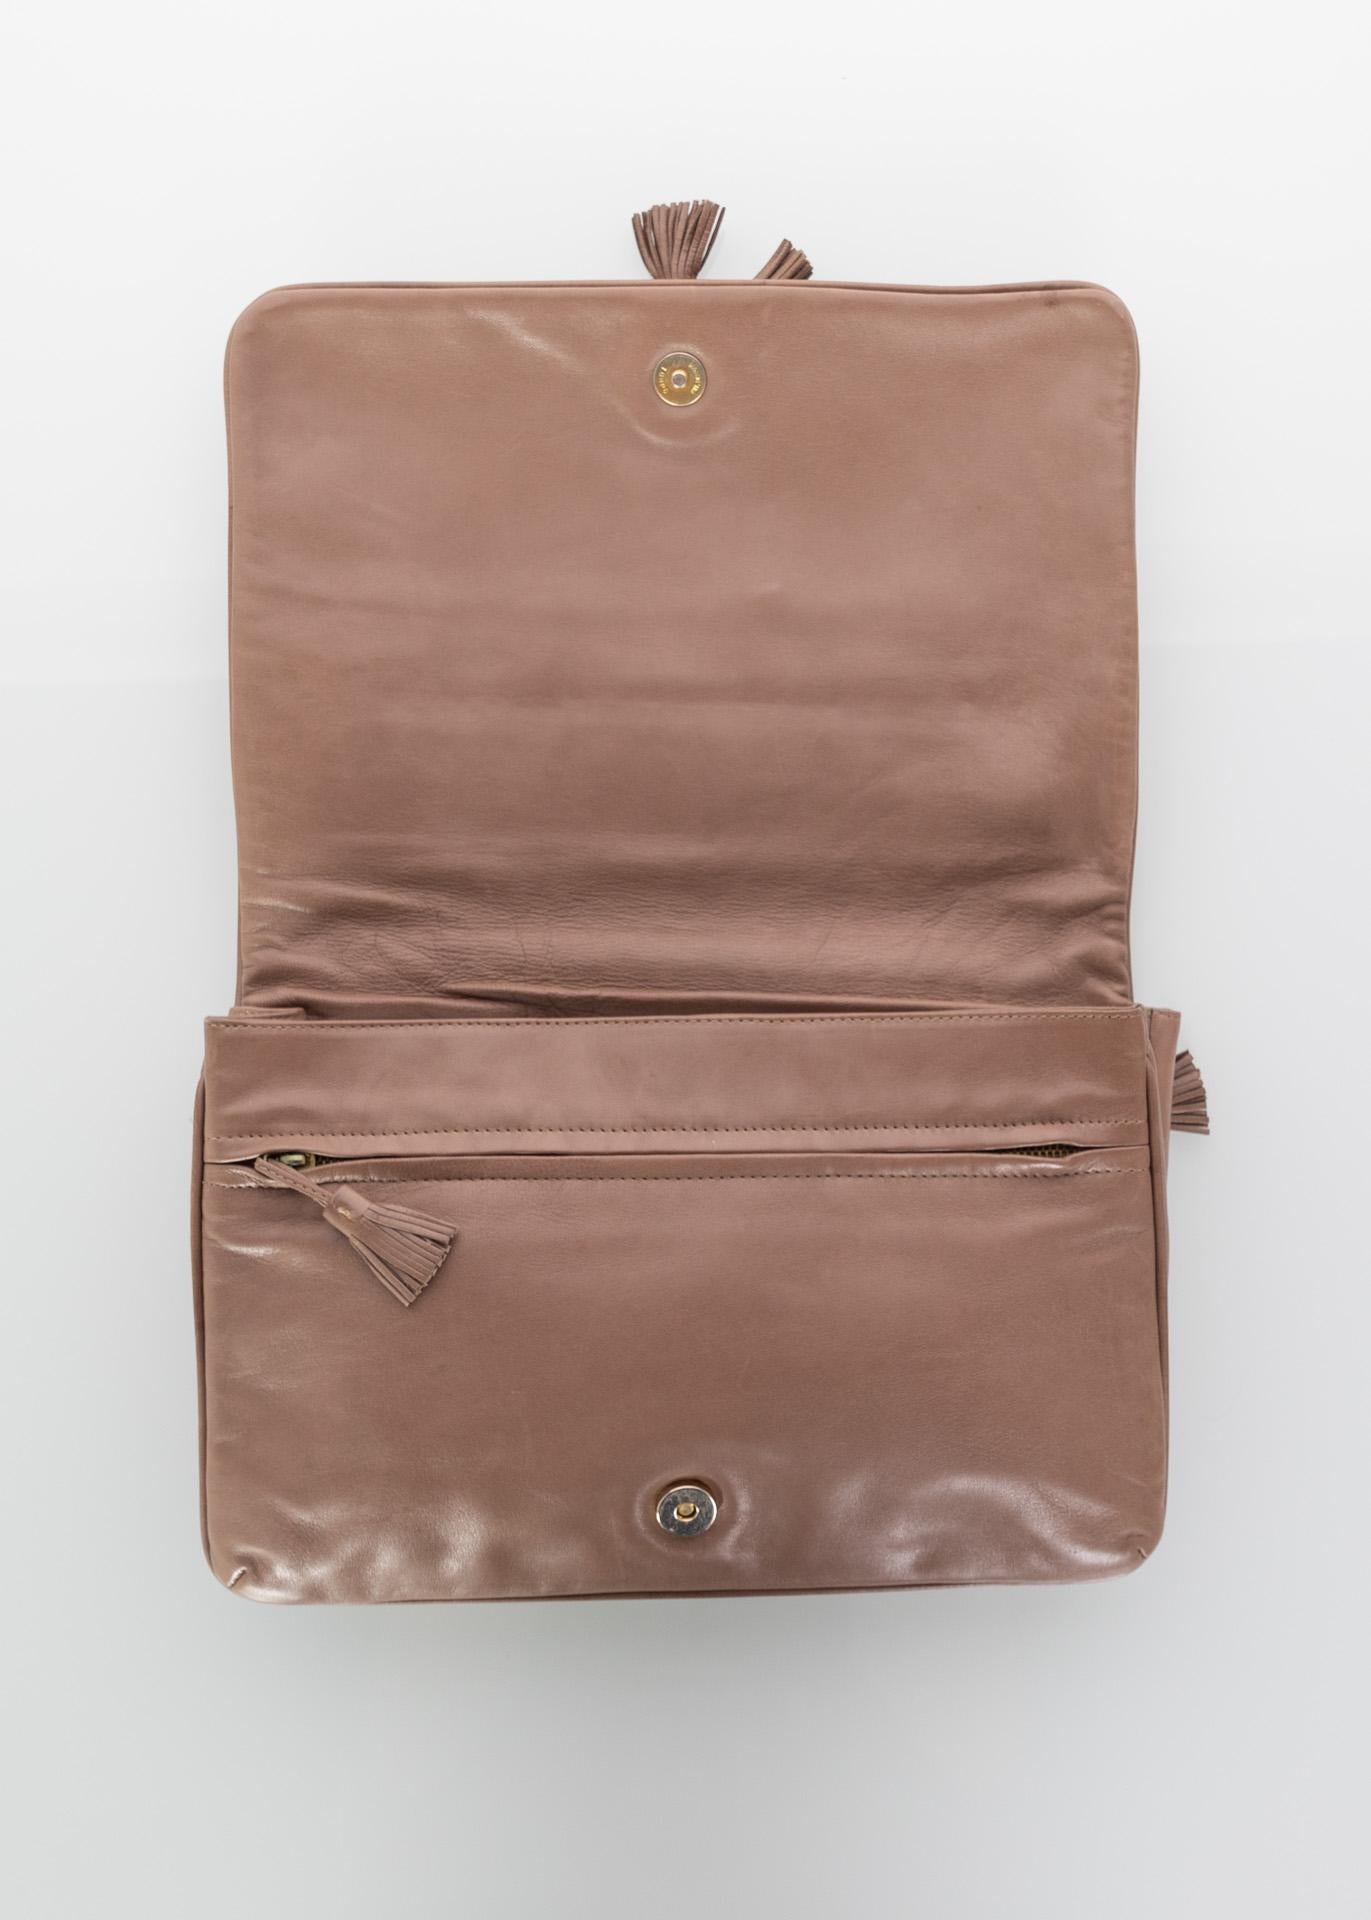 Vintage Bottega Veneta  Intrecciato Leather Tassel Clutch Bag In Excellent Condition For Sale In Boca Raton, FL